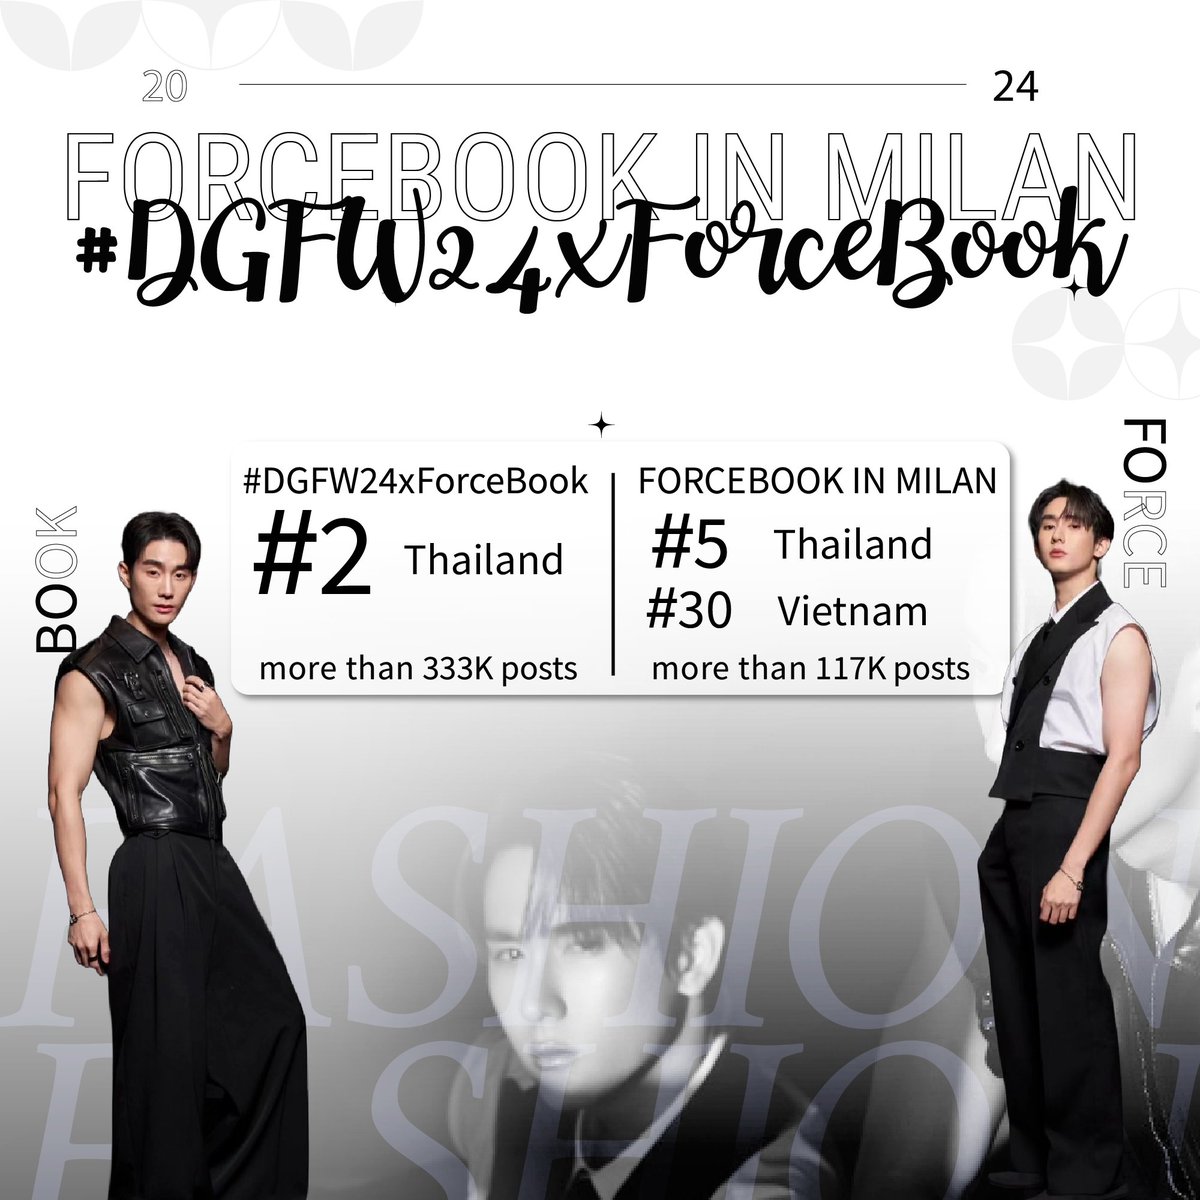 ꒰✨️꒱#DGFW24xForceBook
🗓️ 10.01.24 - 16.01.24

สรุปเทรนด์ 
# 2 Thailand 🔥🔥🔥
more than 333K Posts

(🔑) Keyword 
— FORCEBOOK IN MILAN
# 5 Thailand 🇹🇭 
# 30 Vietnam 🇻🇳 
more than 117K Posts

#fforce_ #kasibook
#TrendForceBook101

ขอบคุณทุกกำลังใจที่ส่งให้สองหนุ่ม DG